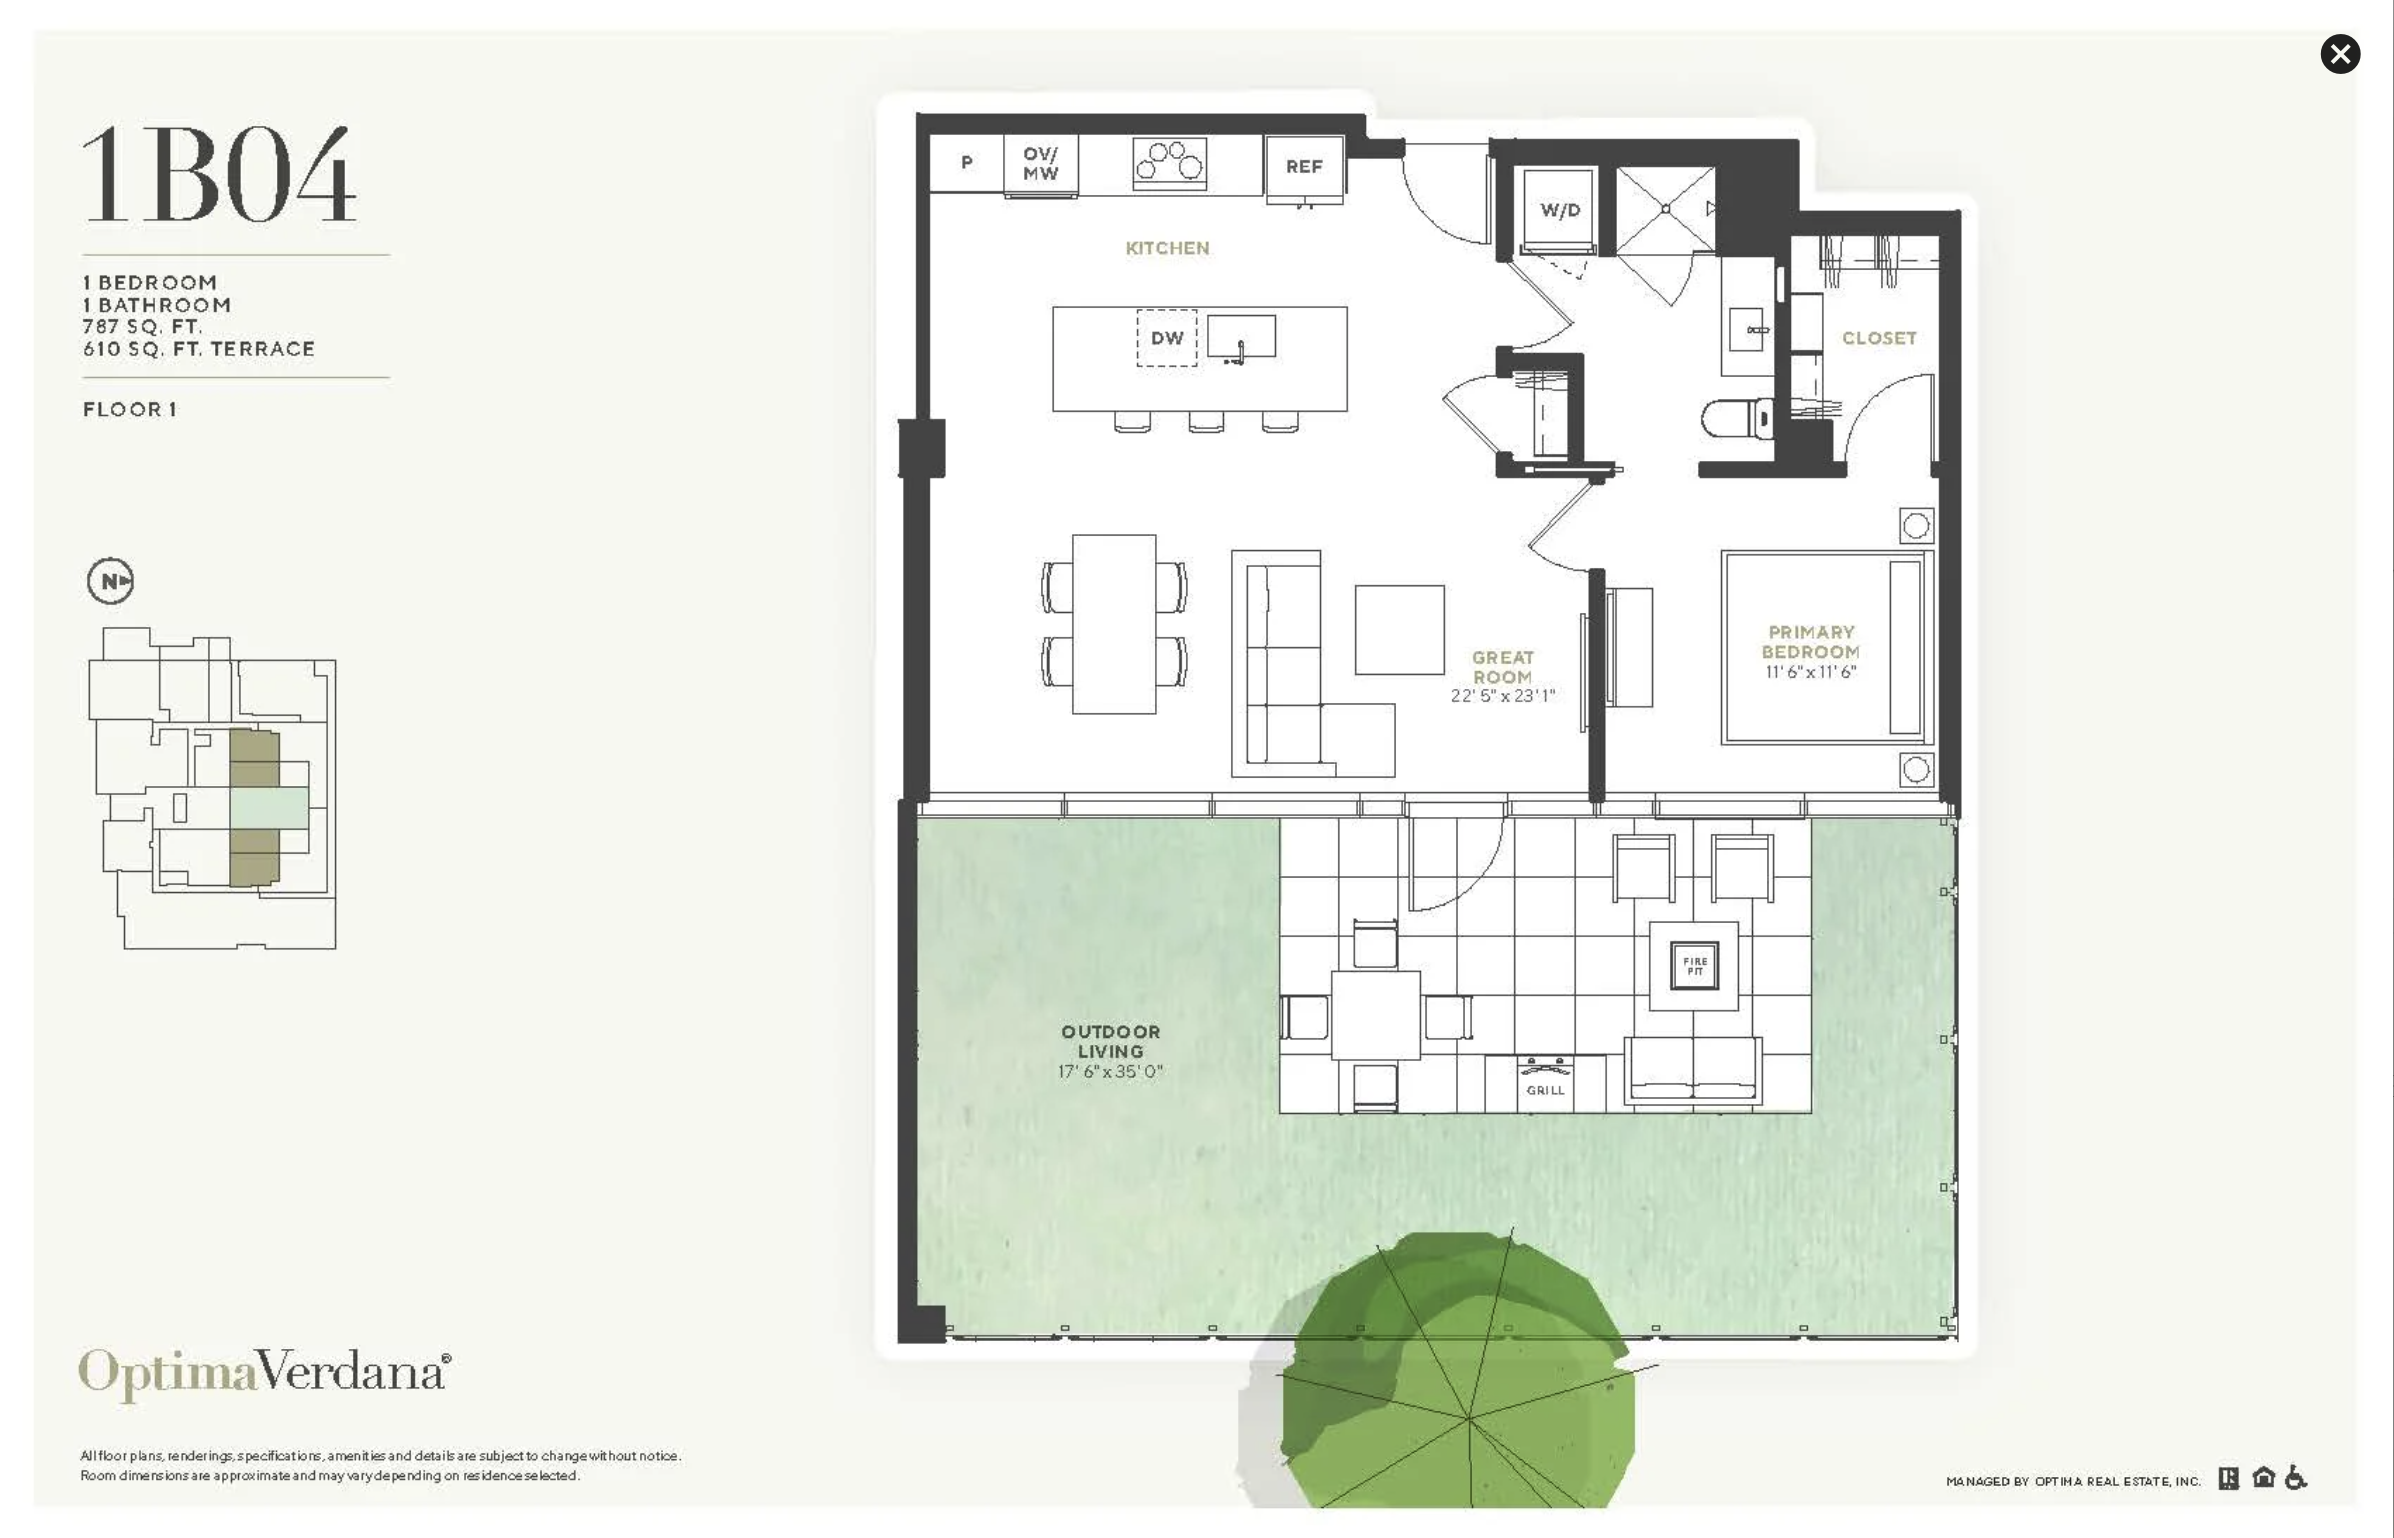 Sample one-bedroom floor plan via Optima